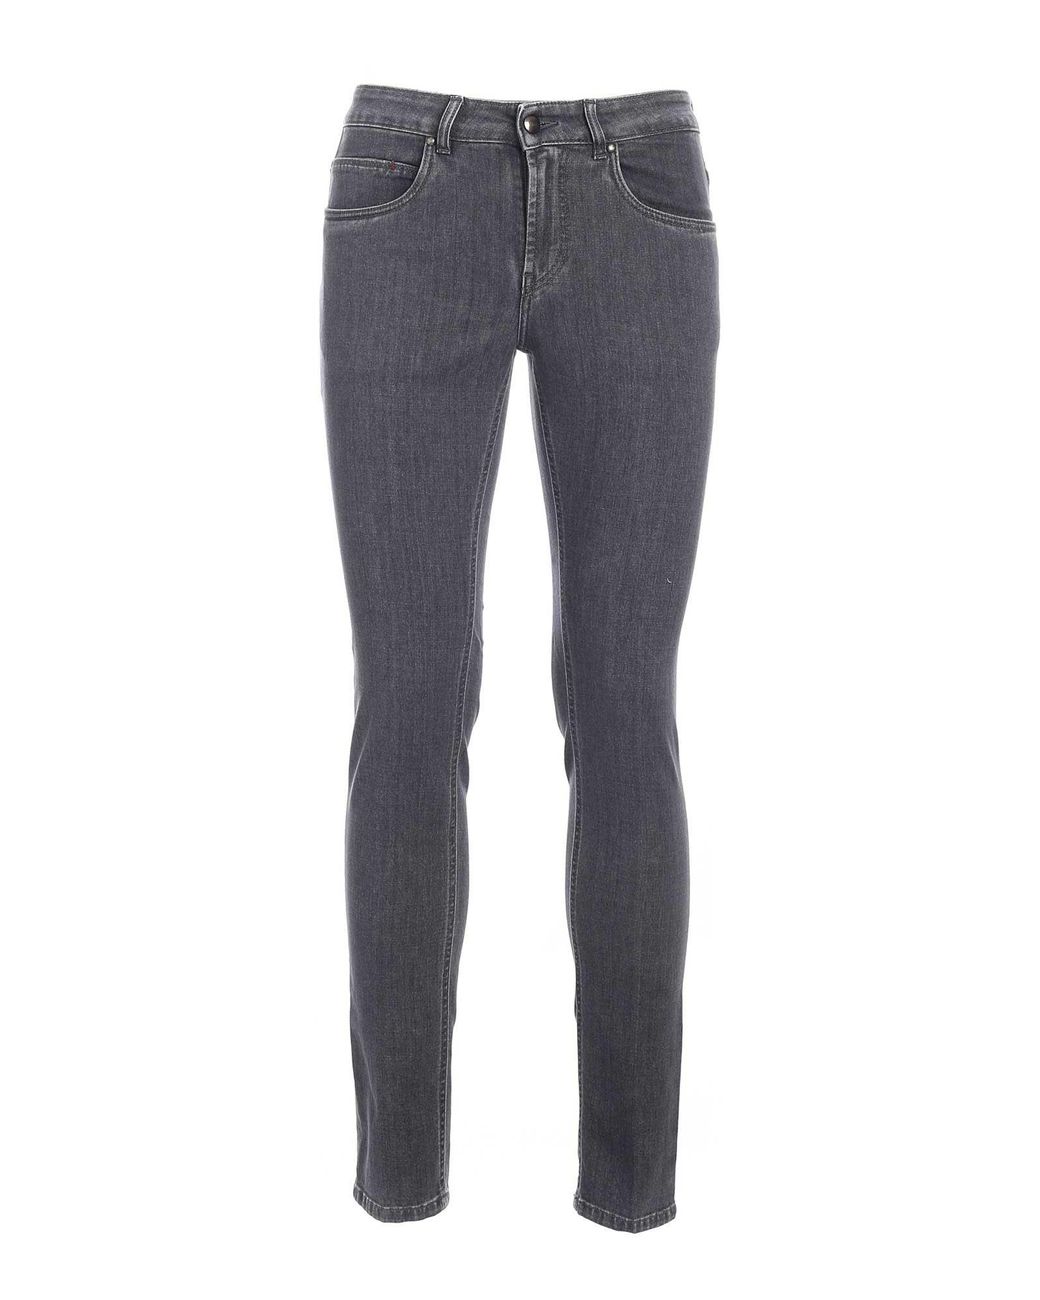 Fay Denim 5-pocket Jeans in Grey (Gray) for Men - Lyst